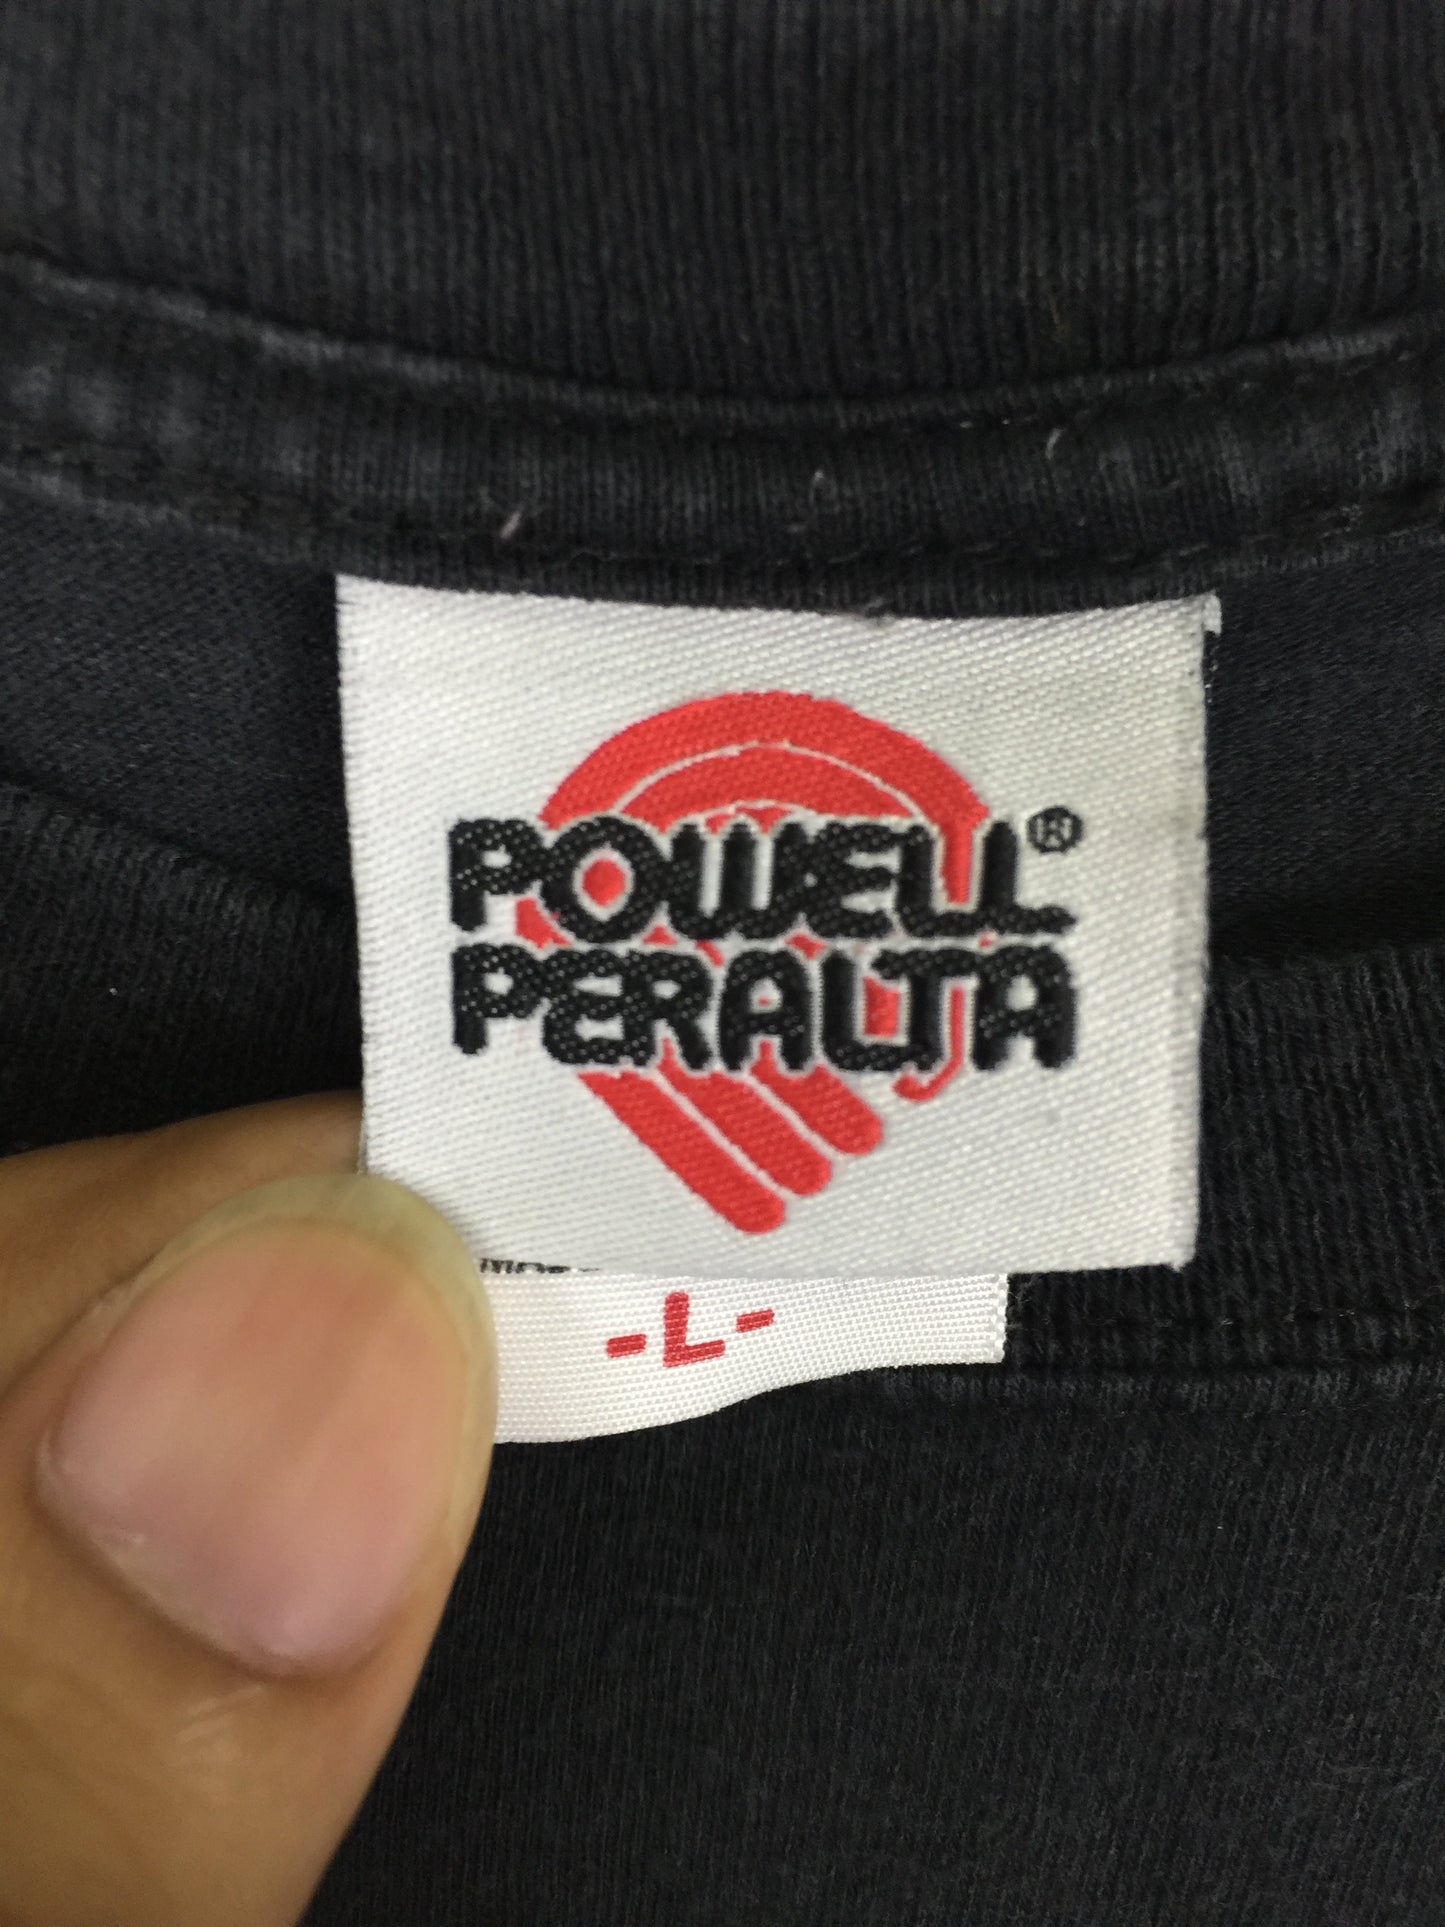 Powell Peralta Skateboard 2005 skulls T-shirt